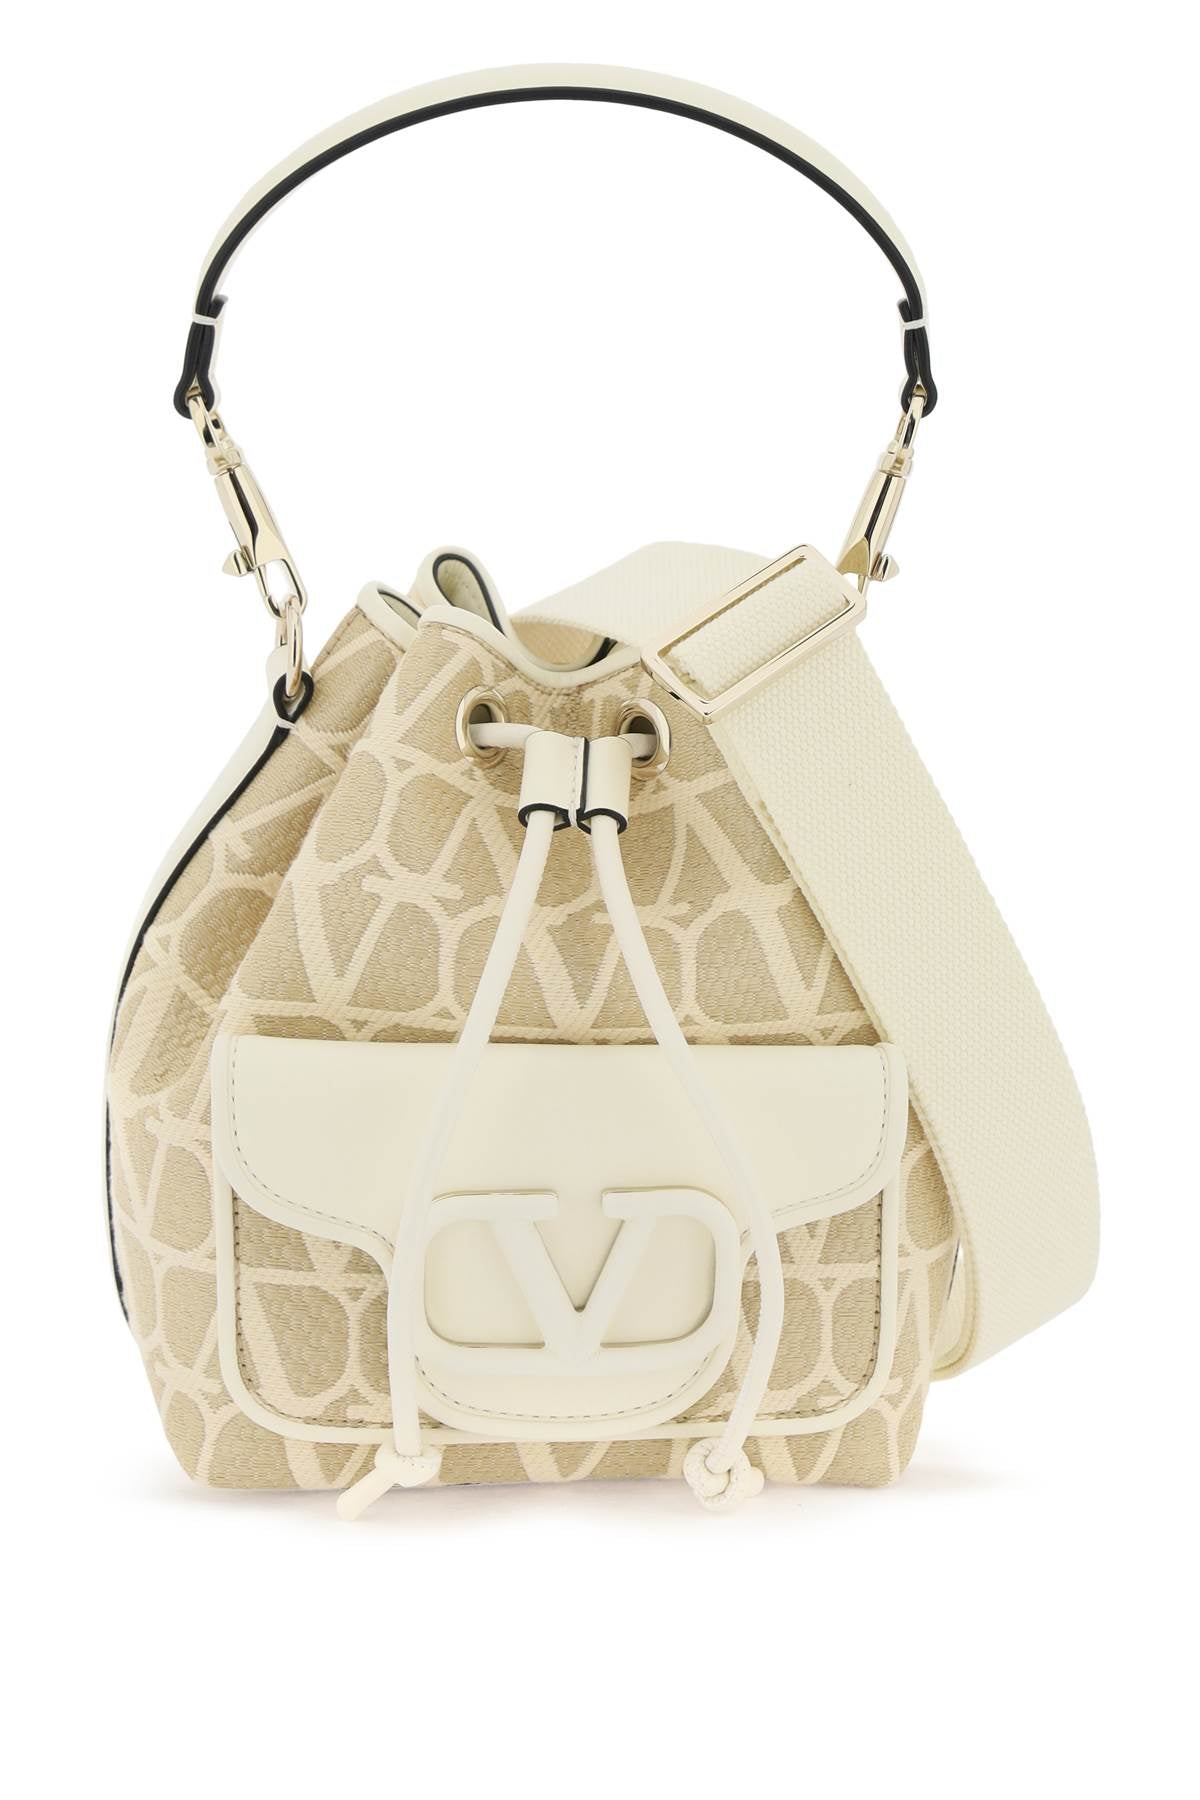 VALENTINO GARAVANI Iconic and Fashion-Forward: The Ultimate Bucket Handbag for Women